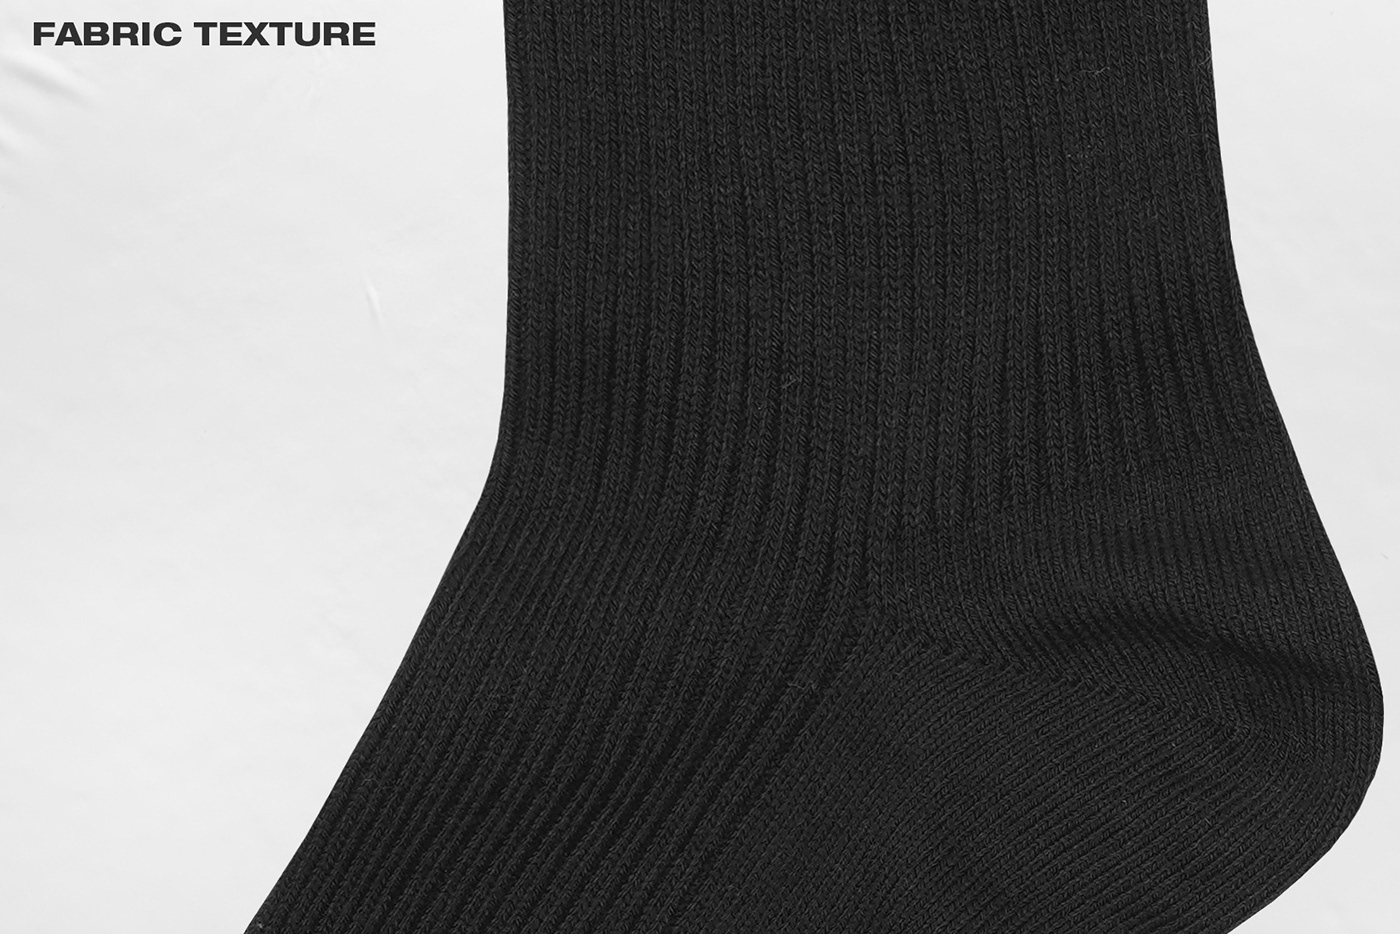 socks Clothing Mockup Packaging apparel merchandise sports